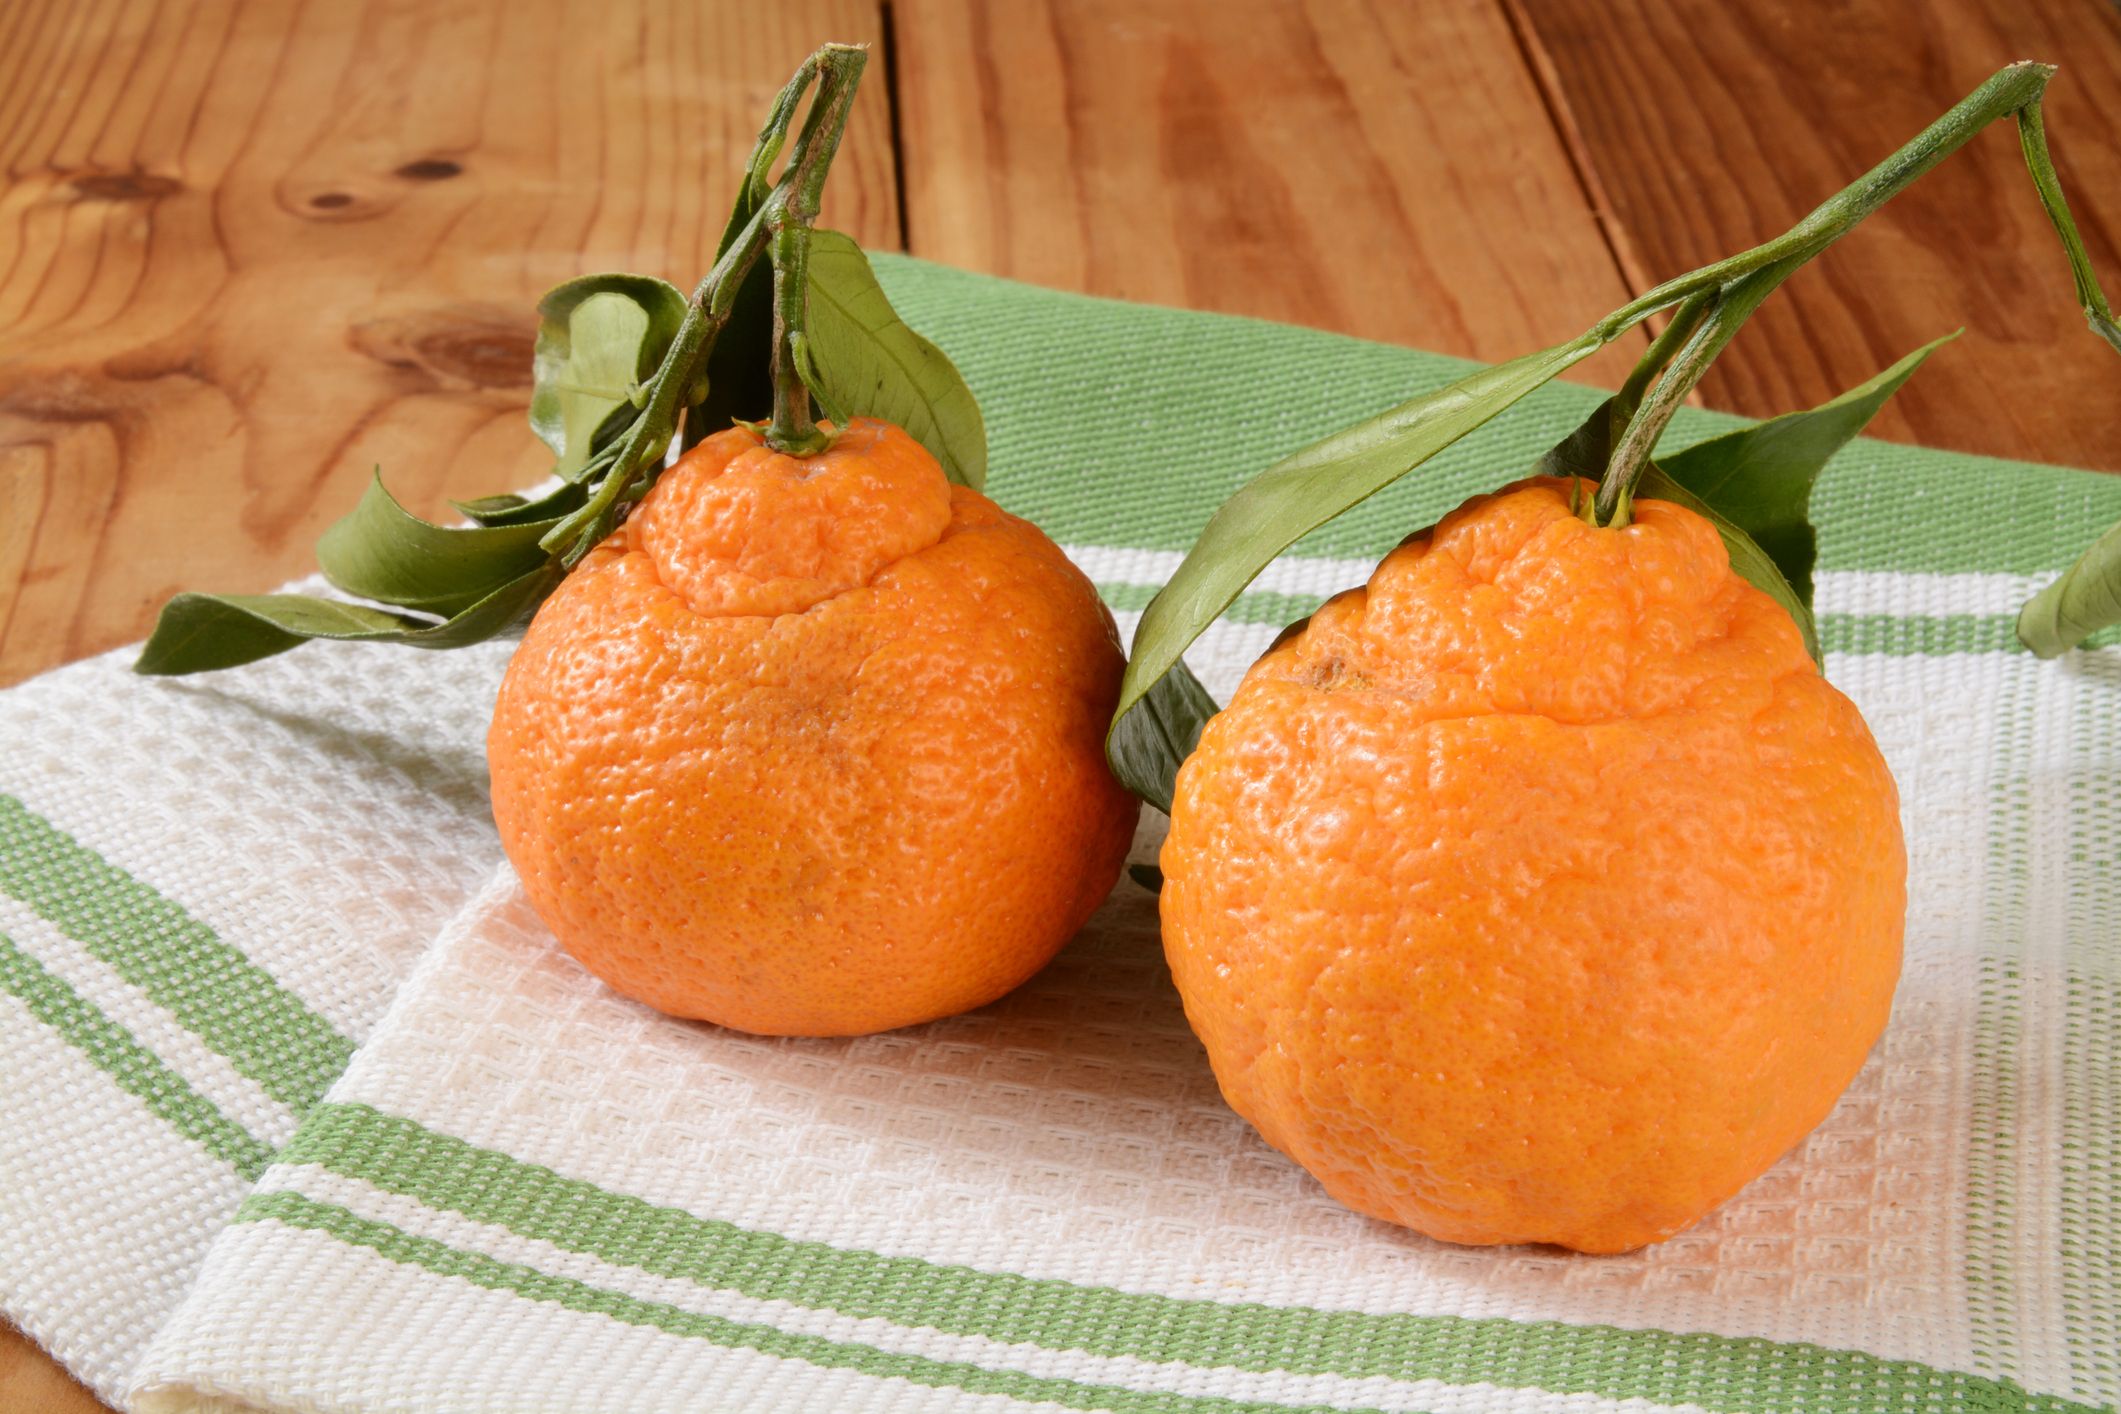 Why are Sumo Oranges trending on TikTok? Internet's latest